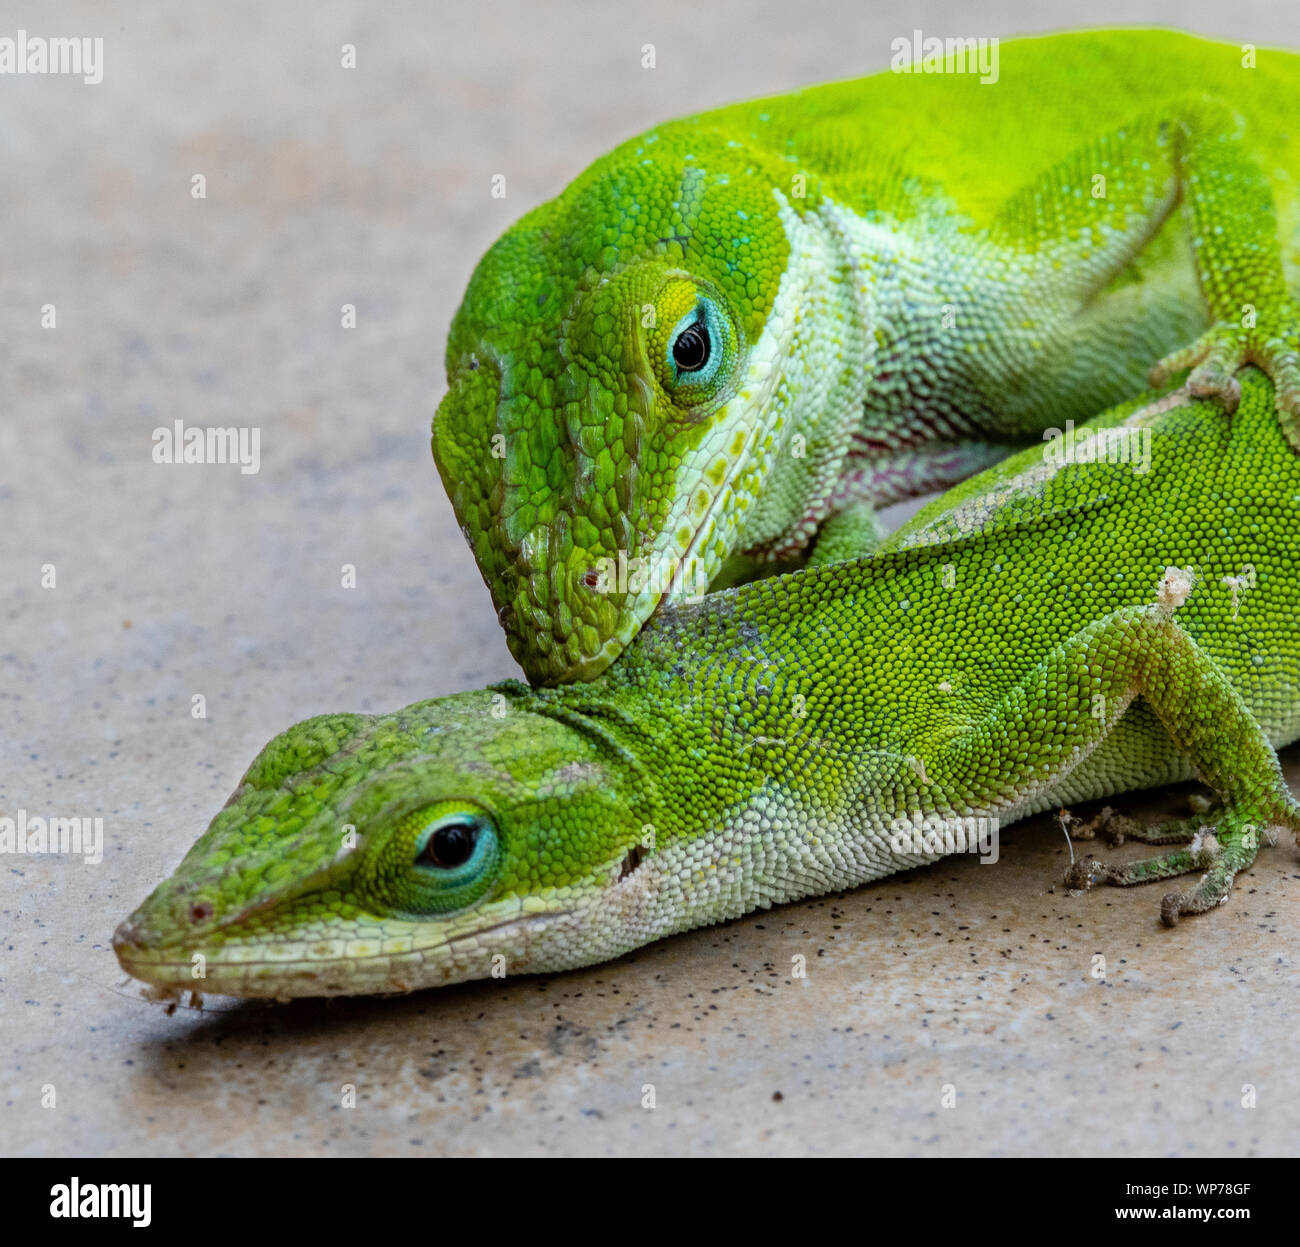 Green lizard, the Carolina Anole, biting another lizard Stock Photo